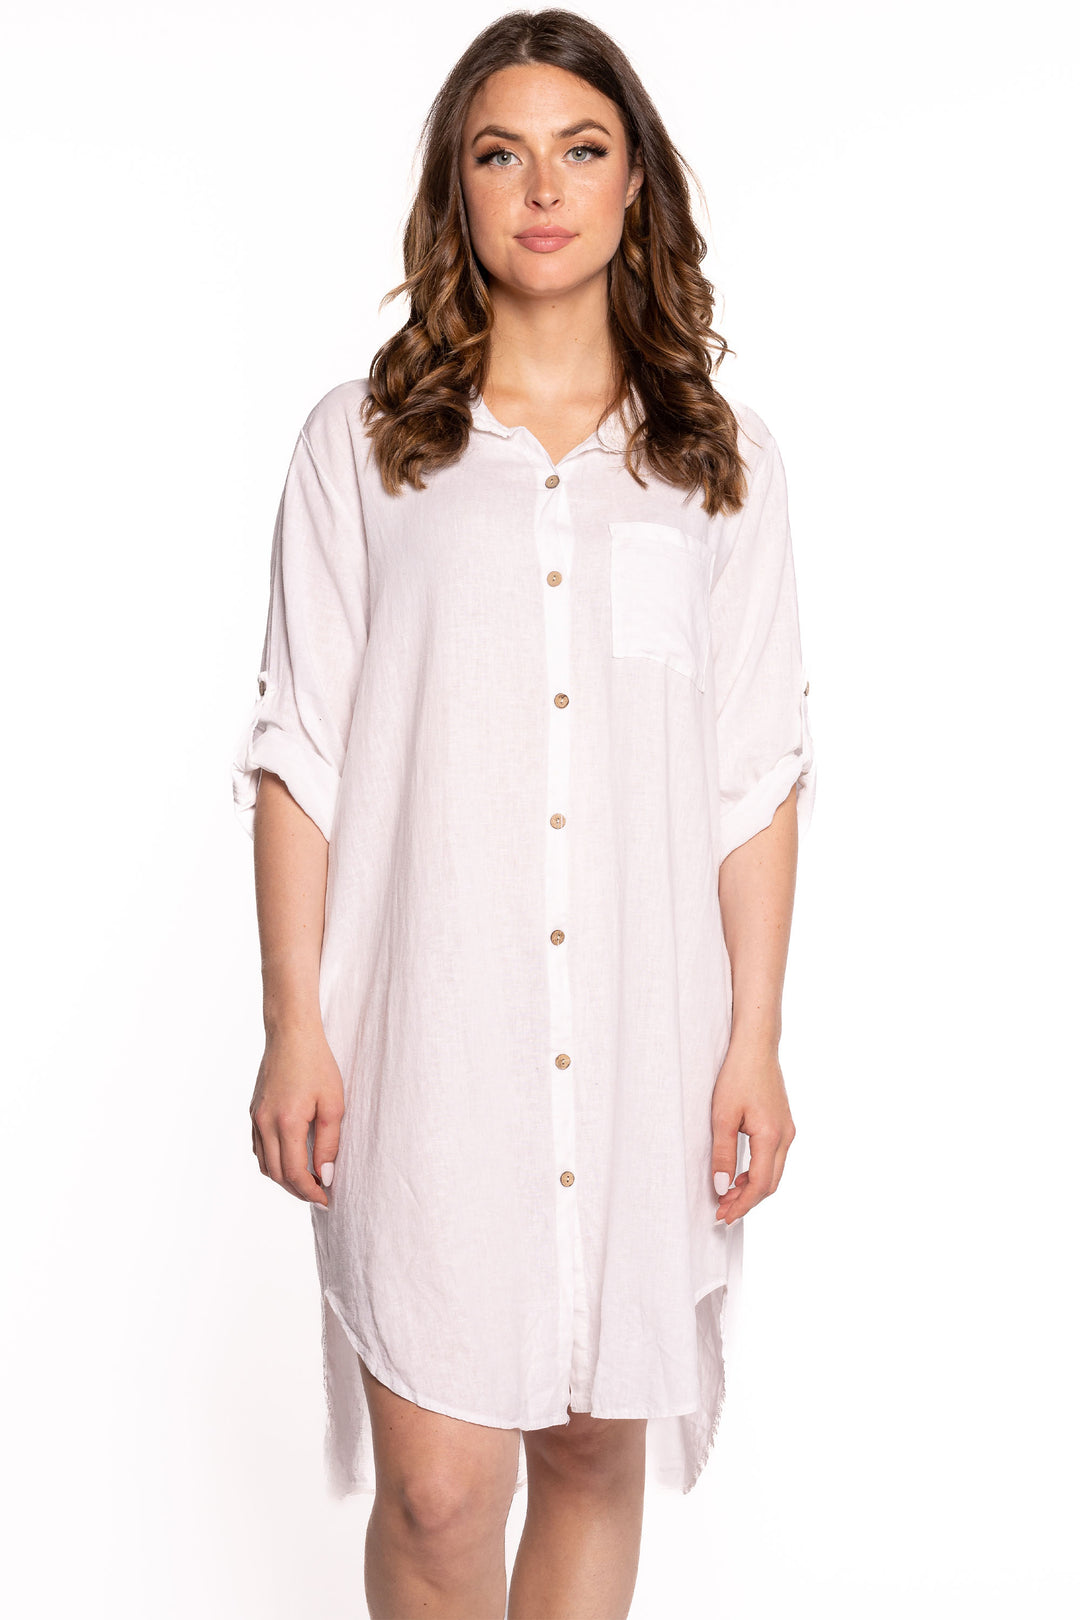 Etern Spring 2023 women's casual linen shirt dress with high-low hem - white